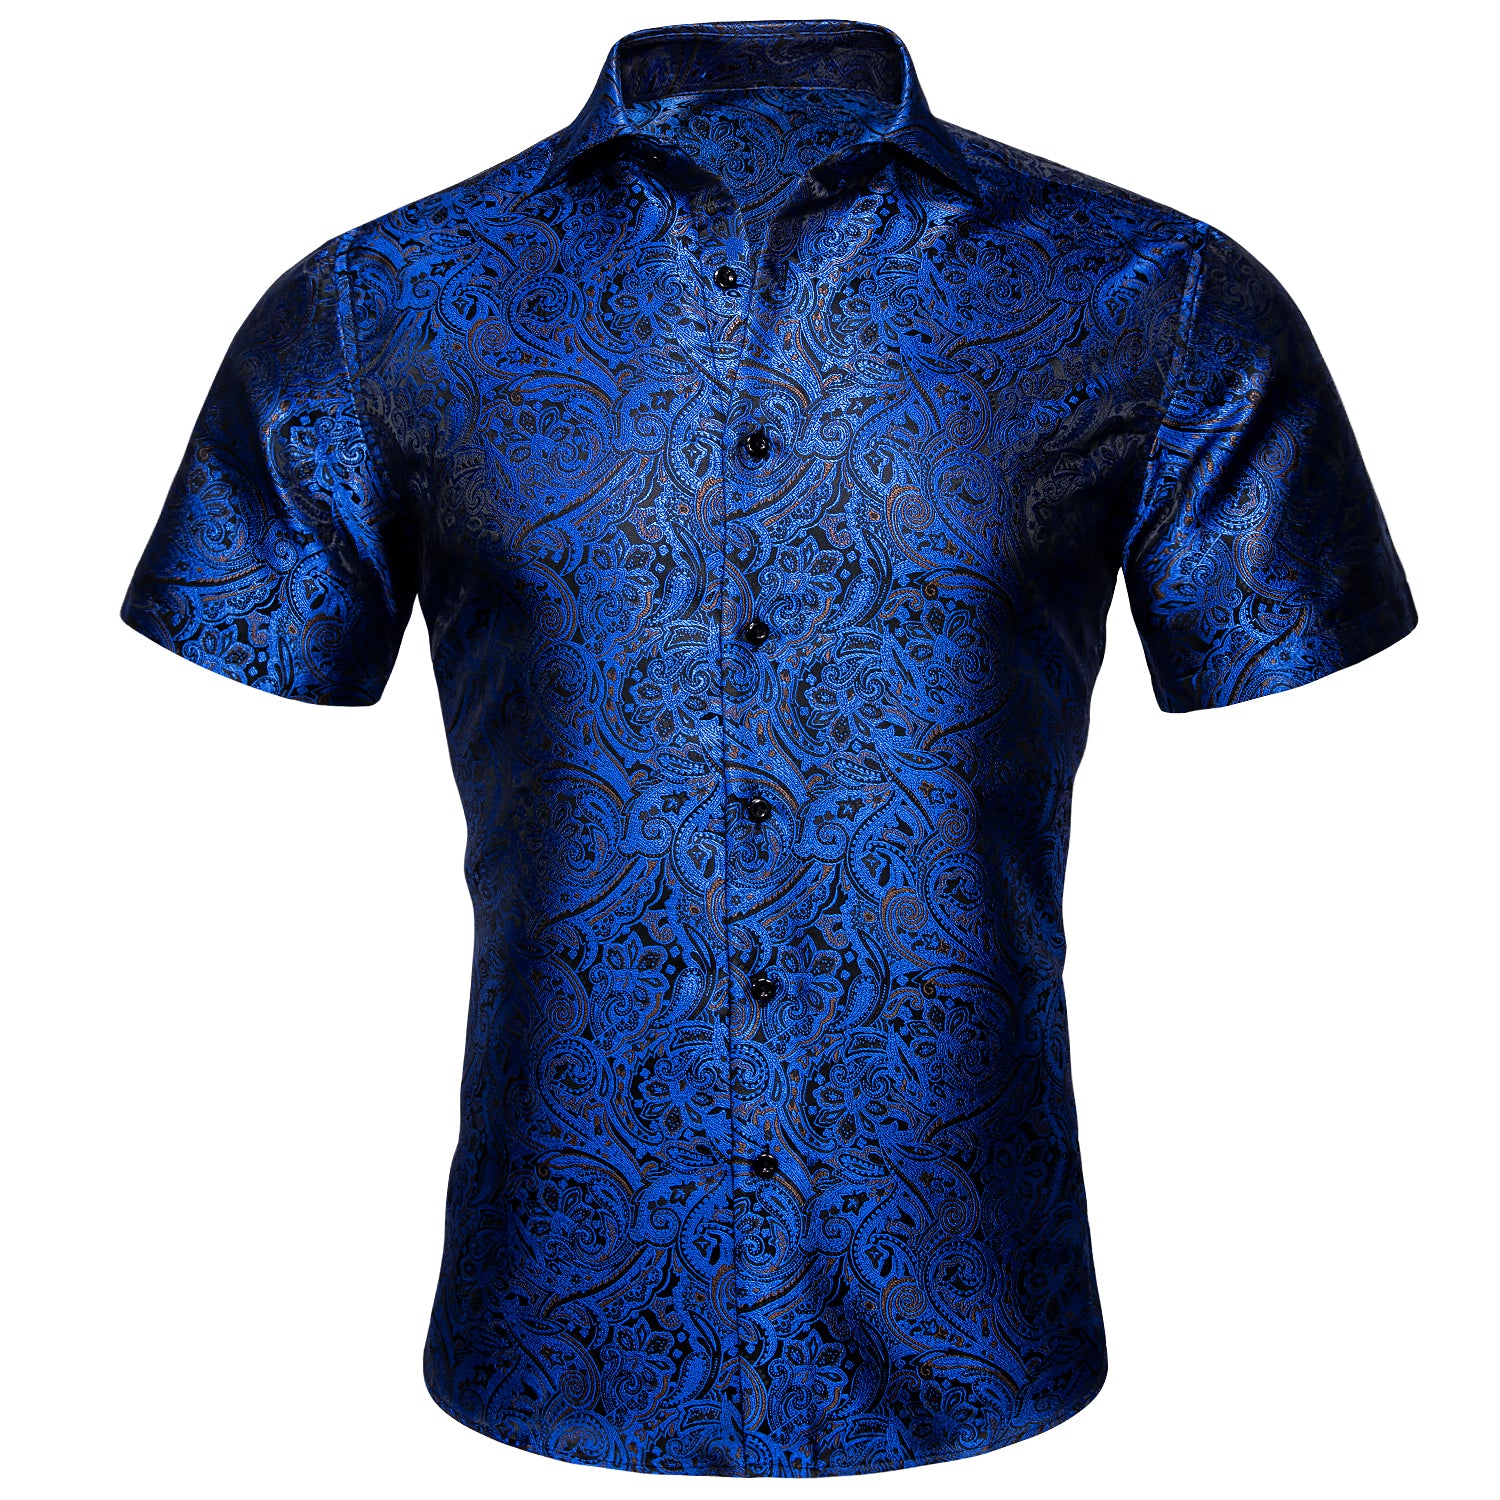 Barry.wang New Navy Blue Paisley Silk Short Sleeve Daily Slim Fit Men's Shirt